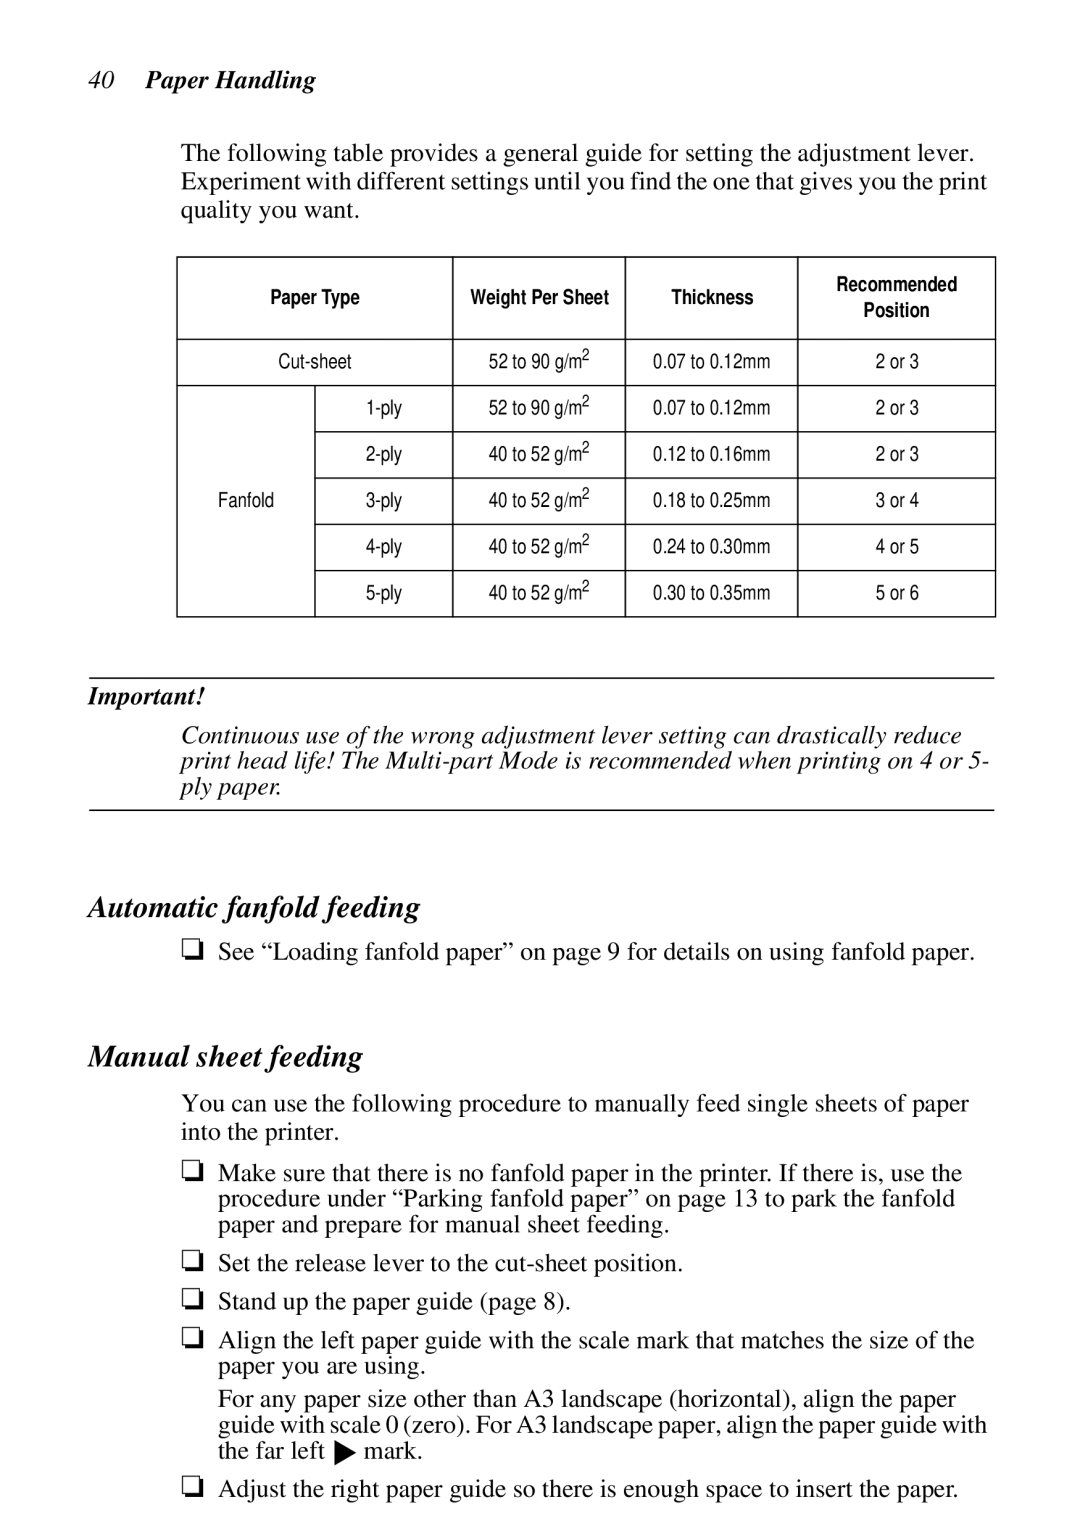 Star Micronics XB24-250 II user manual Automatic fanfold feeding, Manual sheet feeding, Paper Handling 